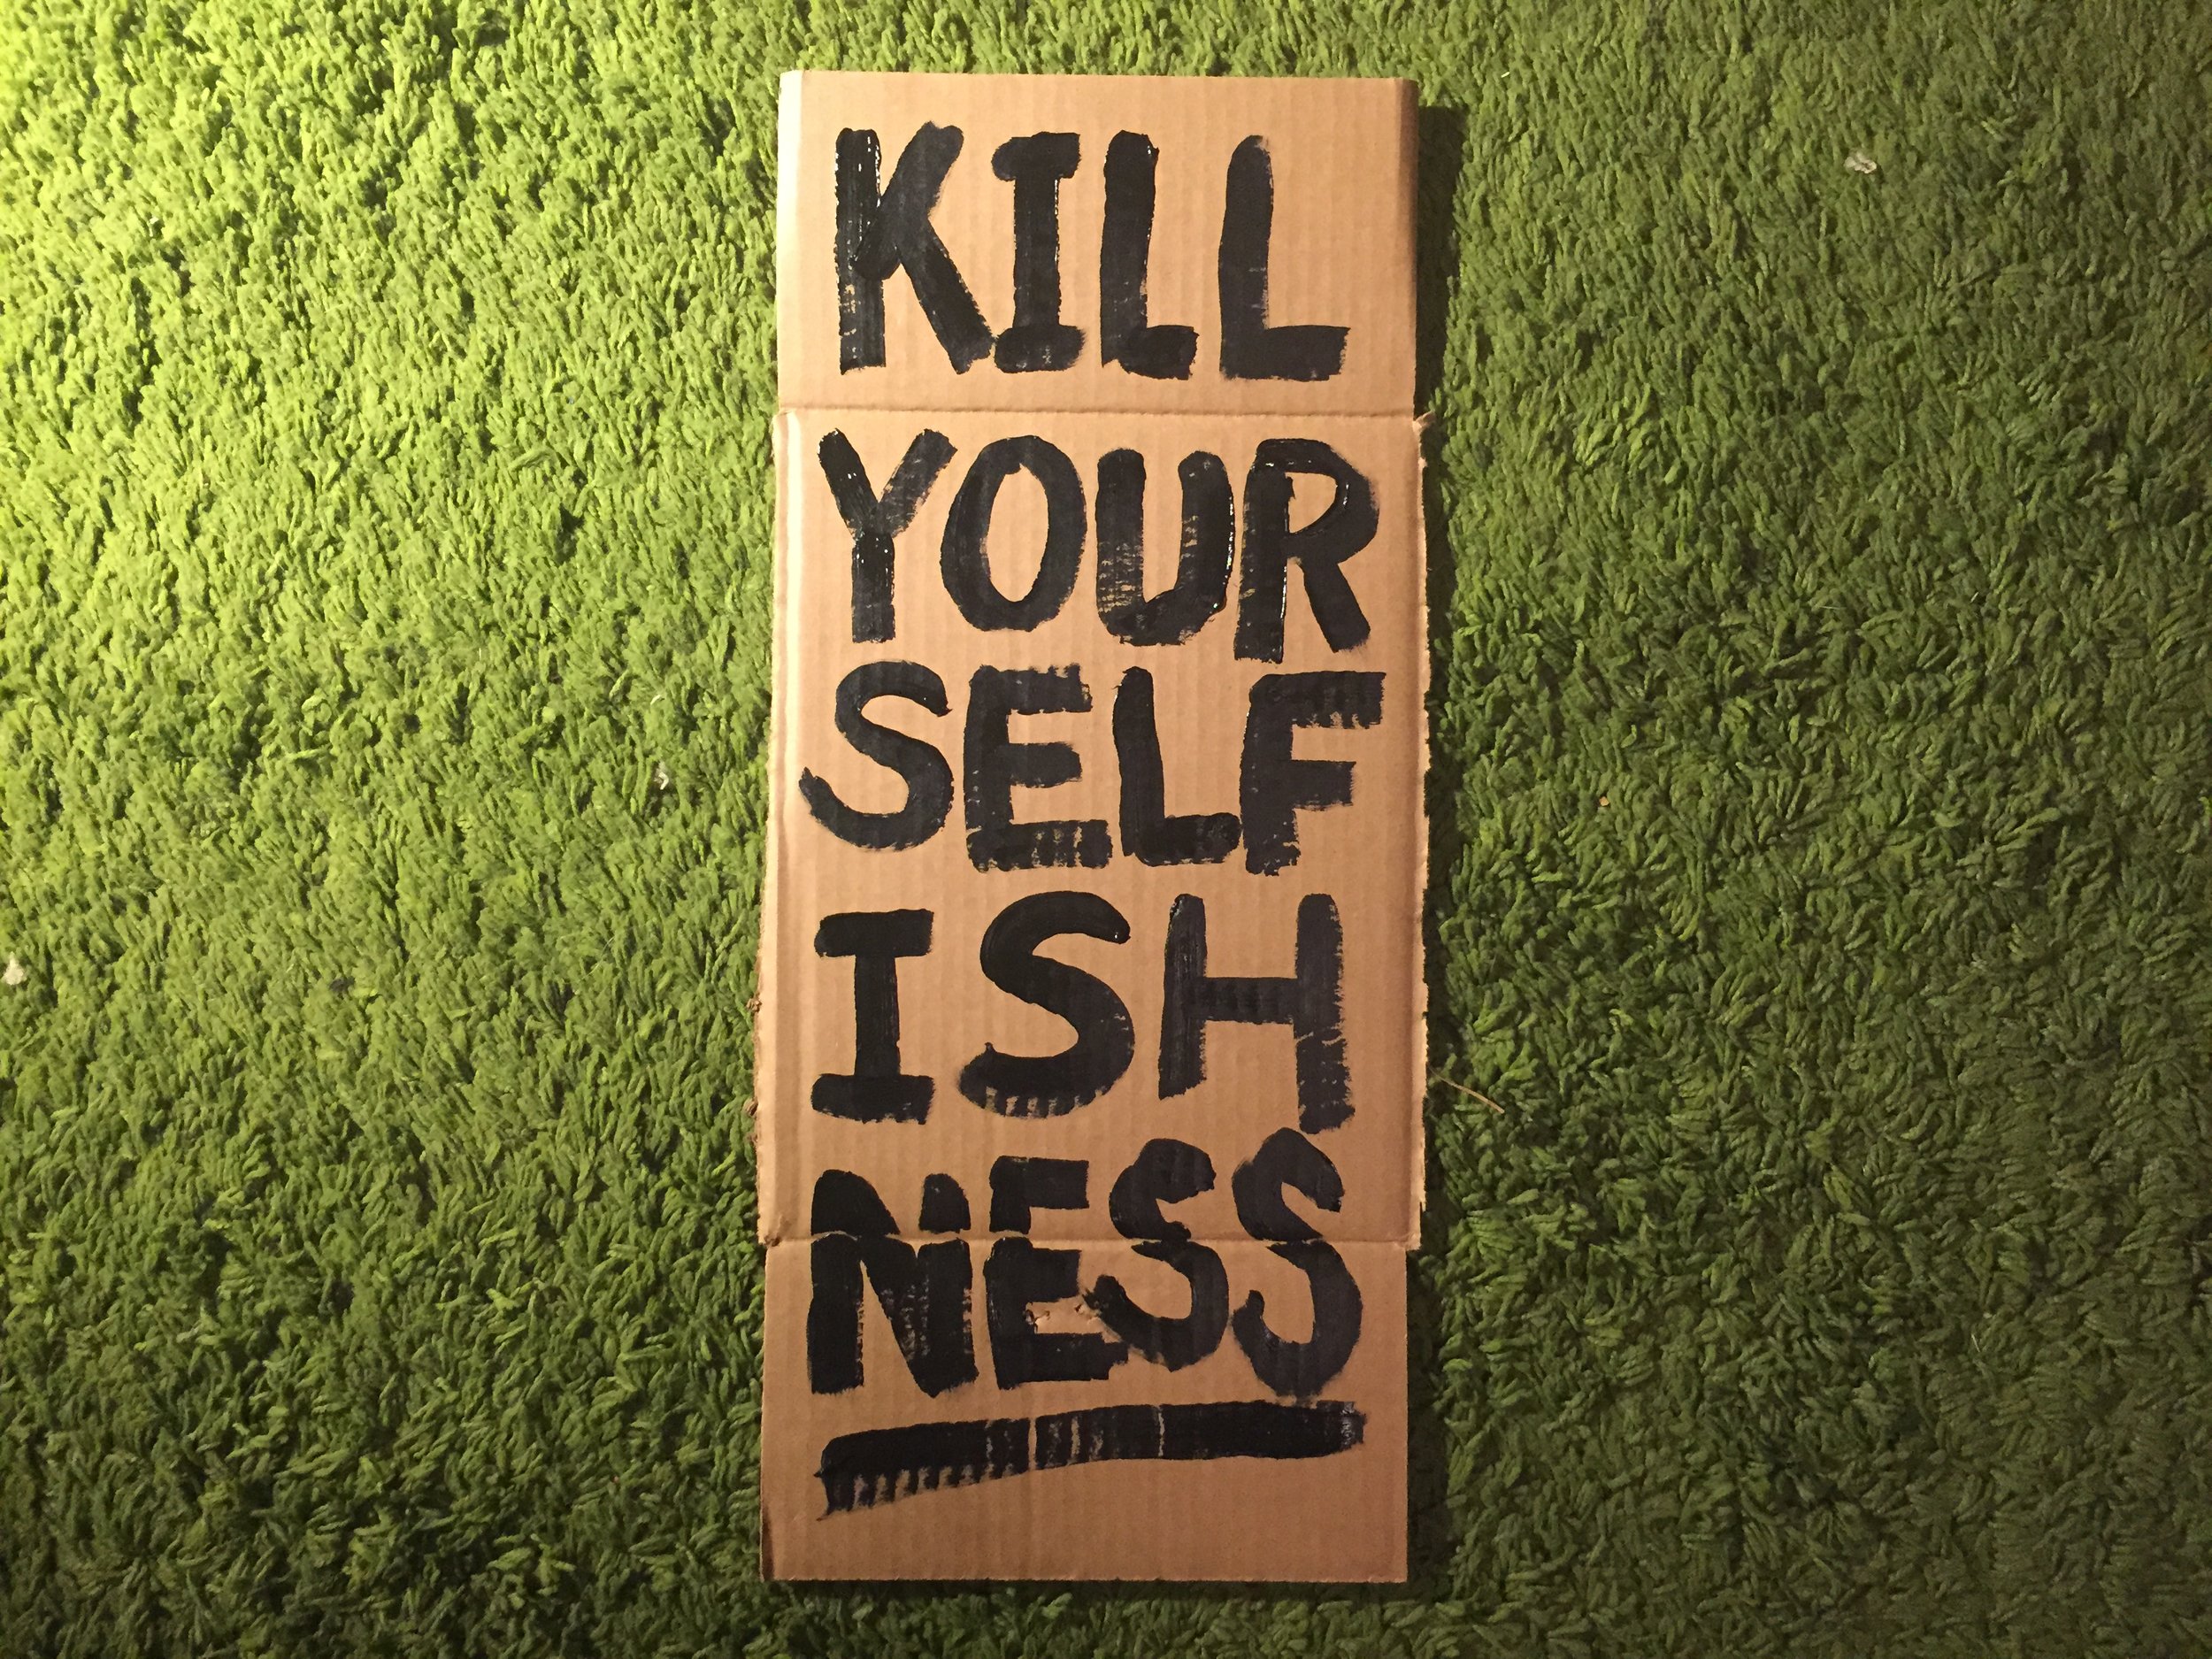 "Kill Your Selfishness" by Emma Seckso